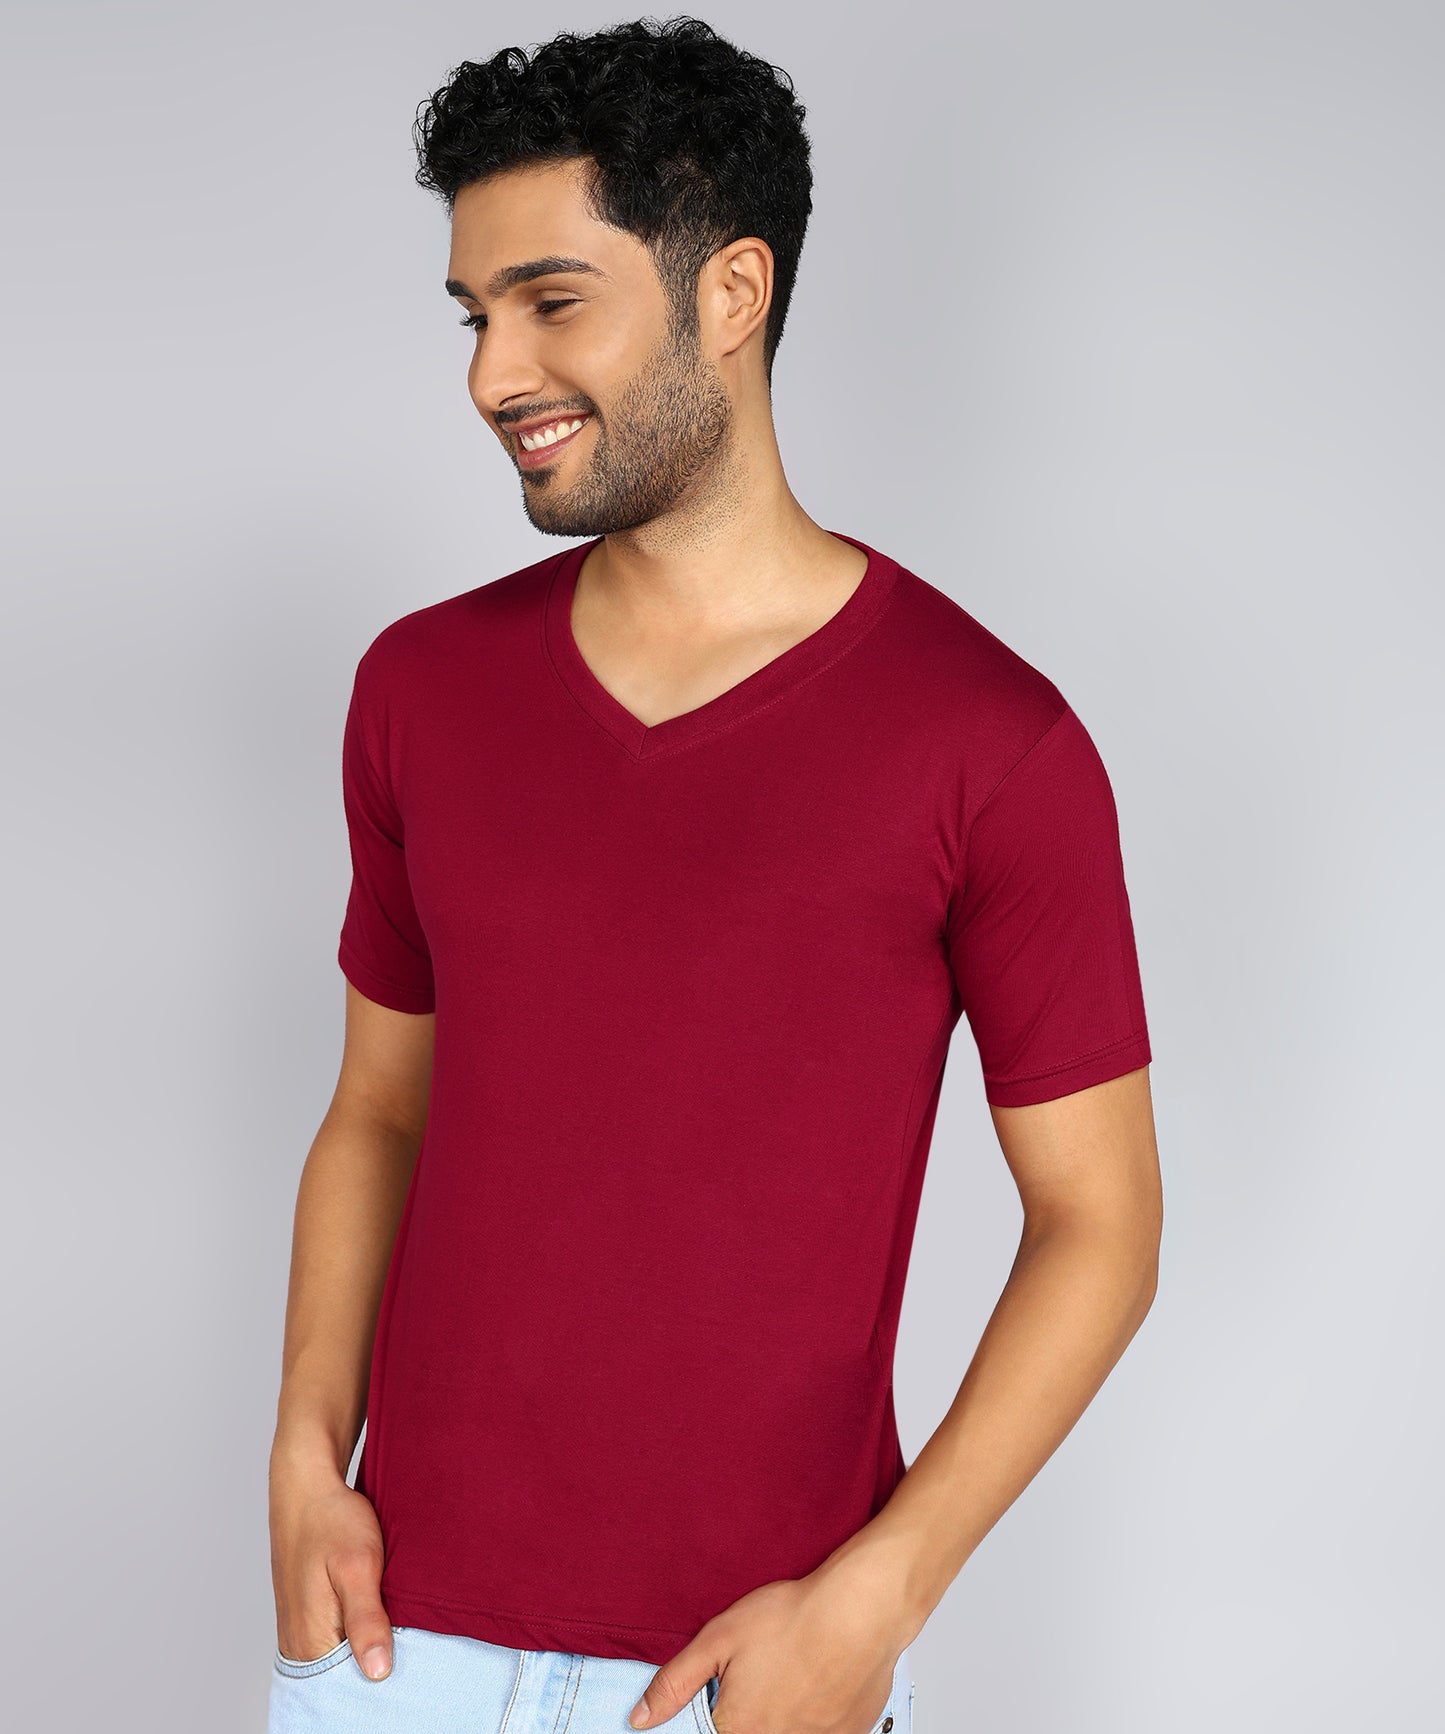 Men's V Neck Half Sleeve T-Shirt Pick any 2, 4, 5, 8, 10 Pieces